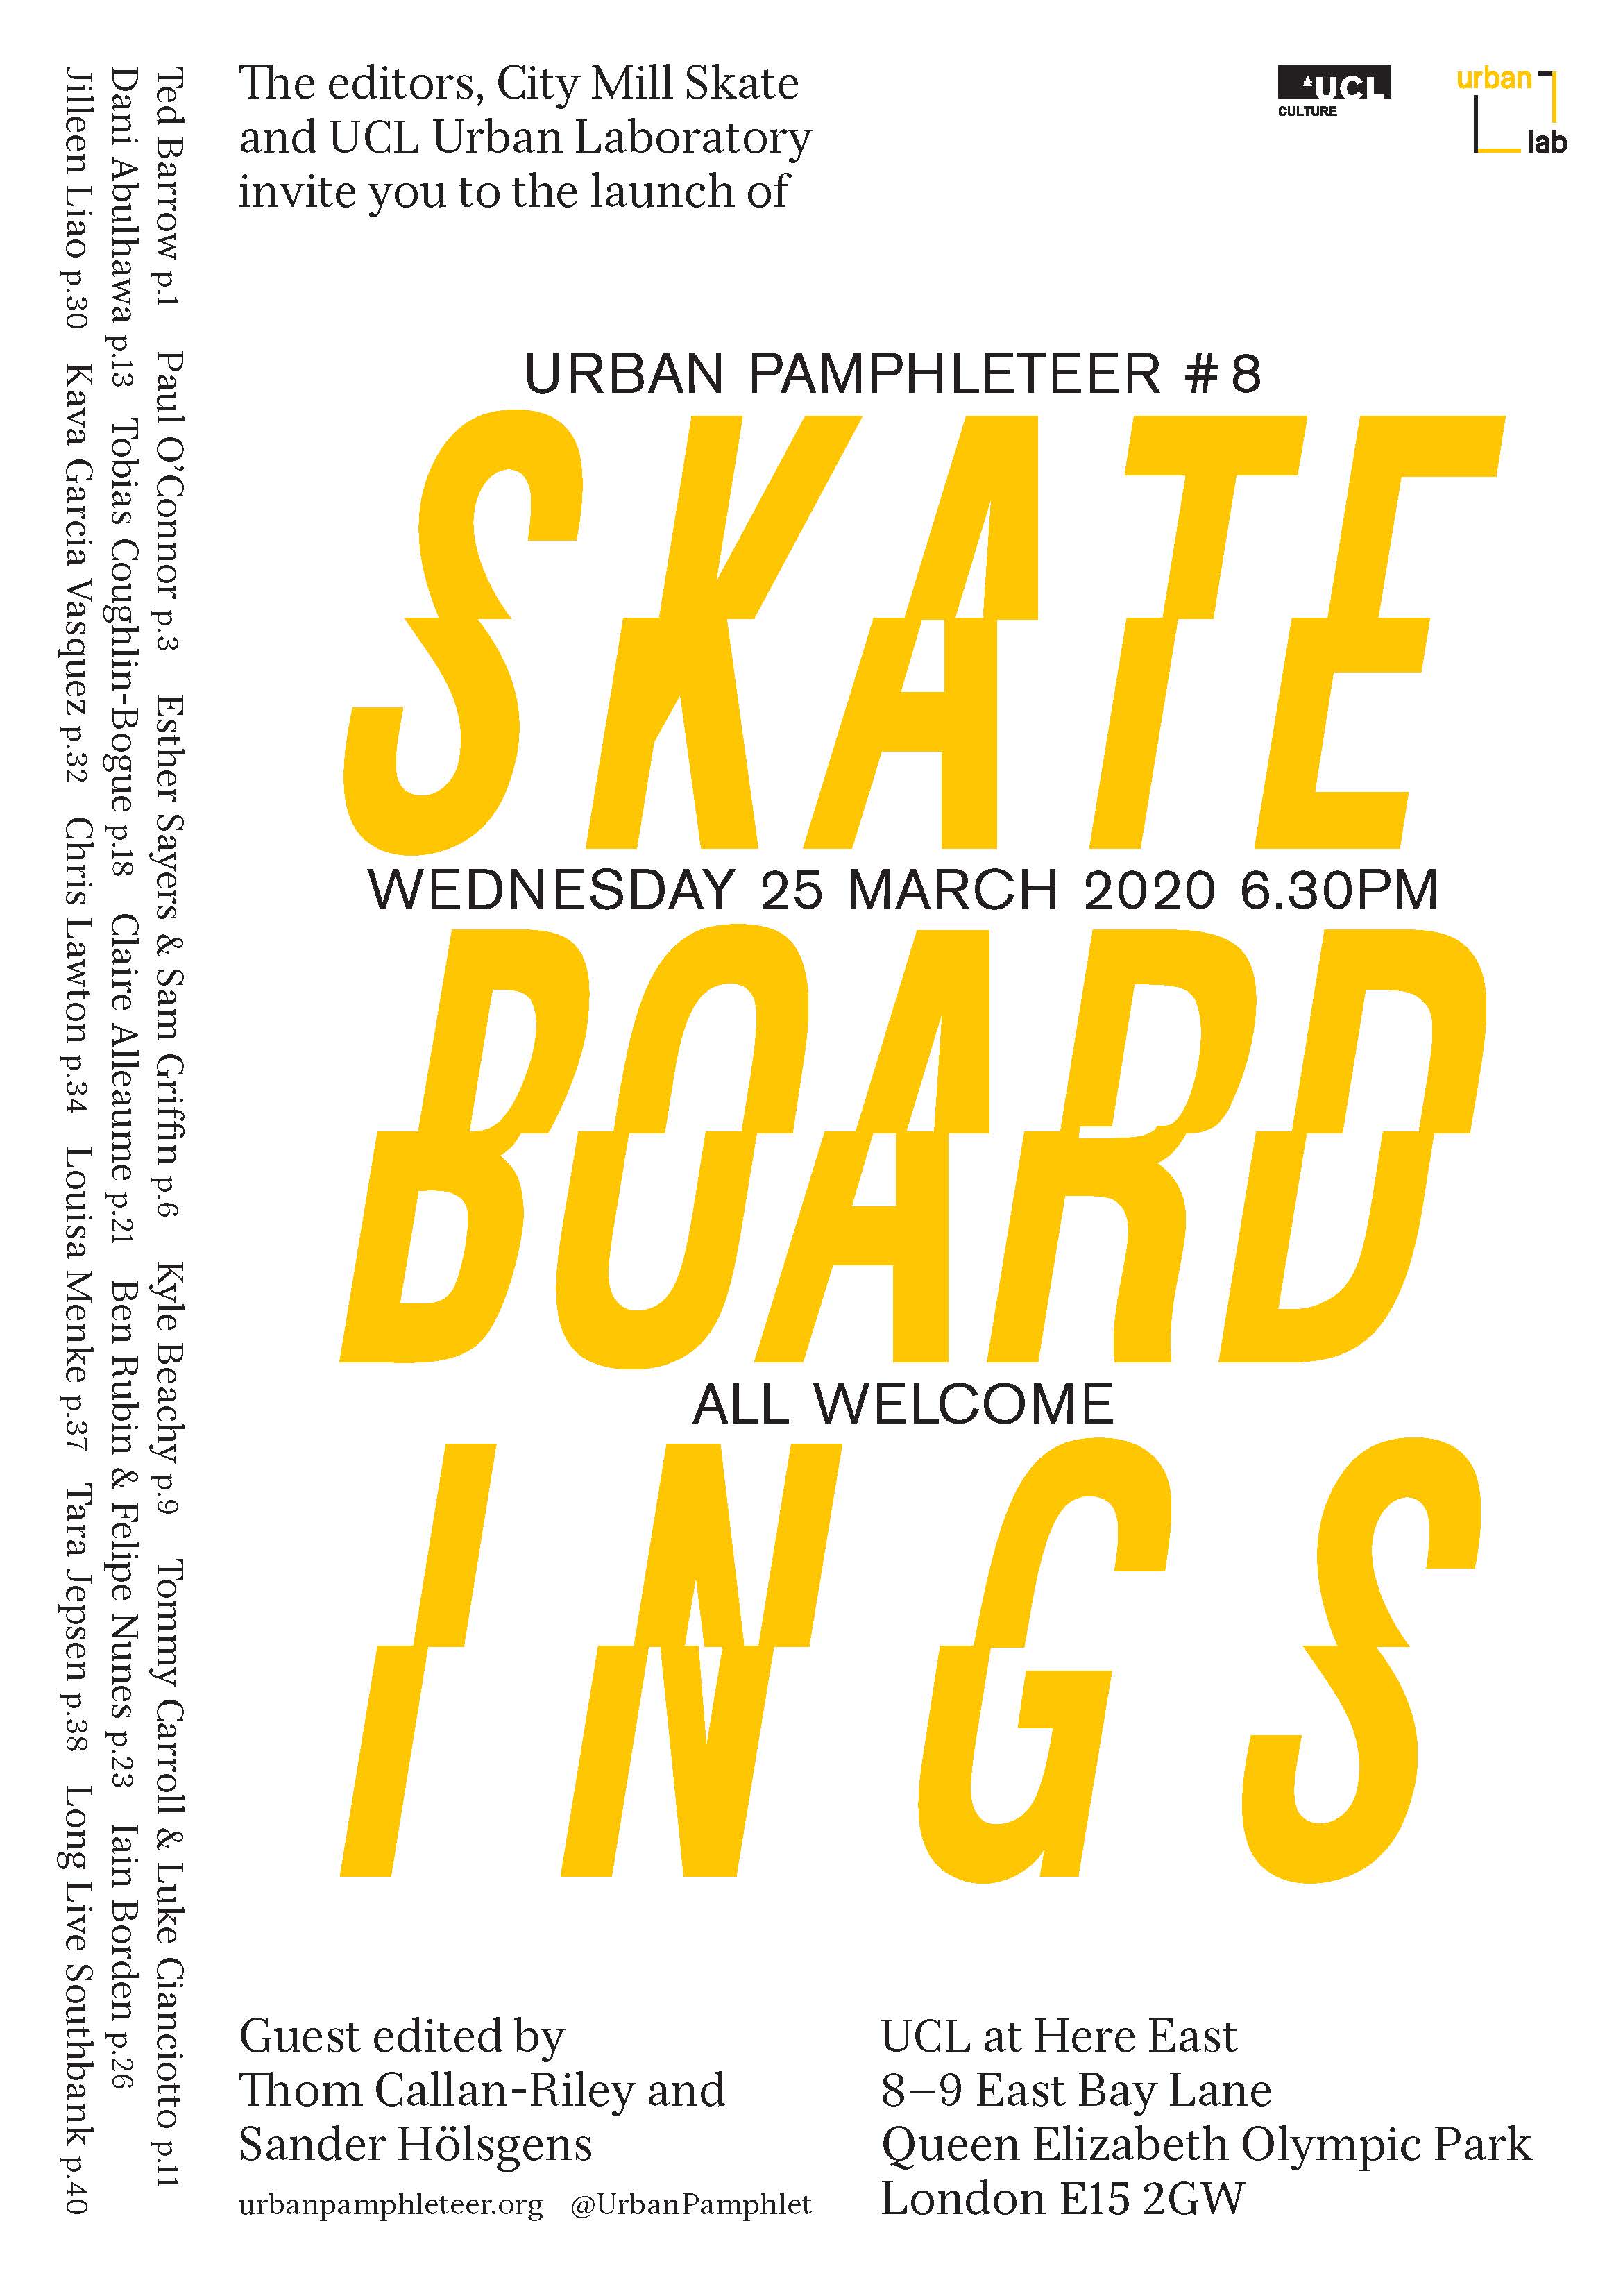 *POSTPONED* Urban Pamphleteer #8 launch: Skateboardings